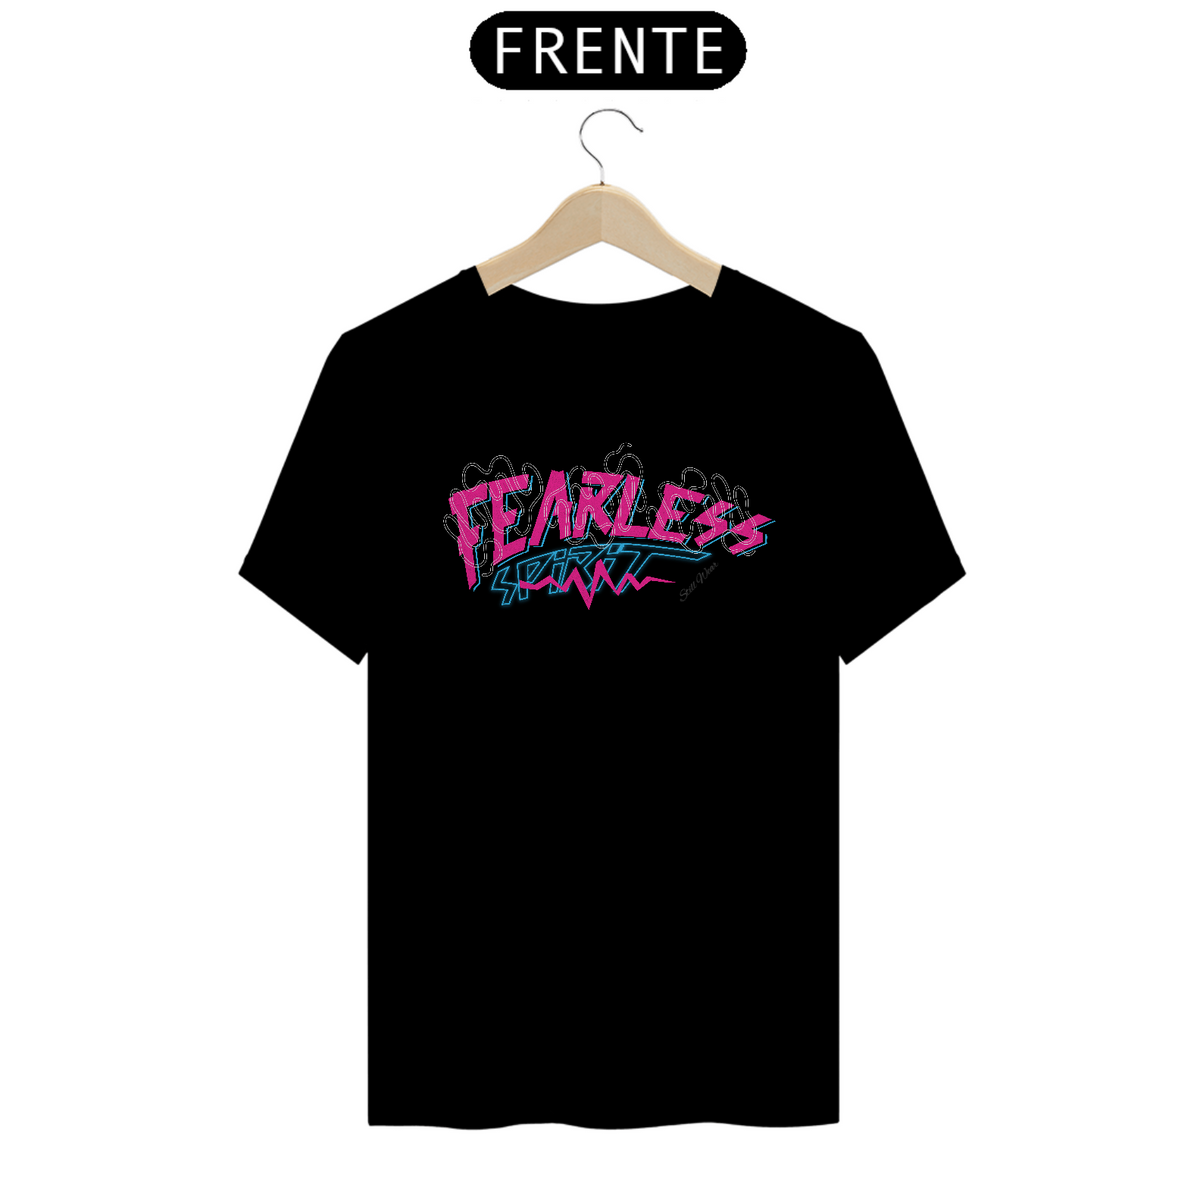 Nome do produto: Camiseta Fearless Spirit